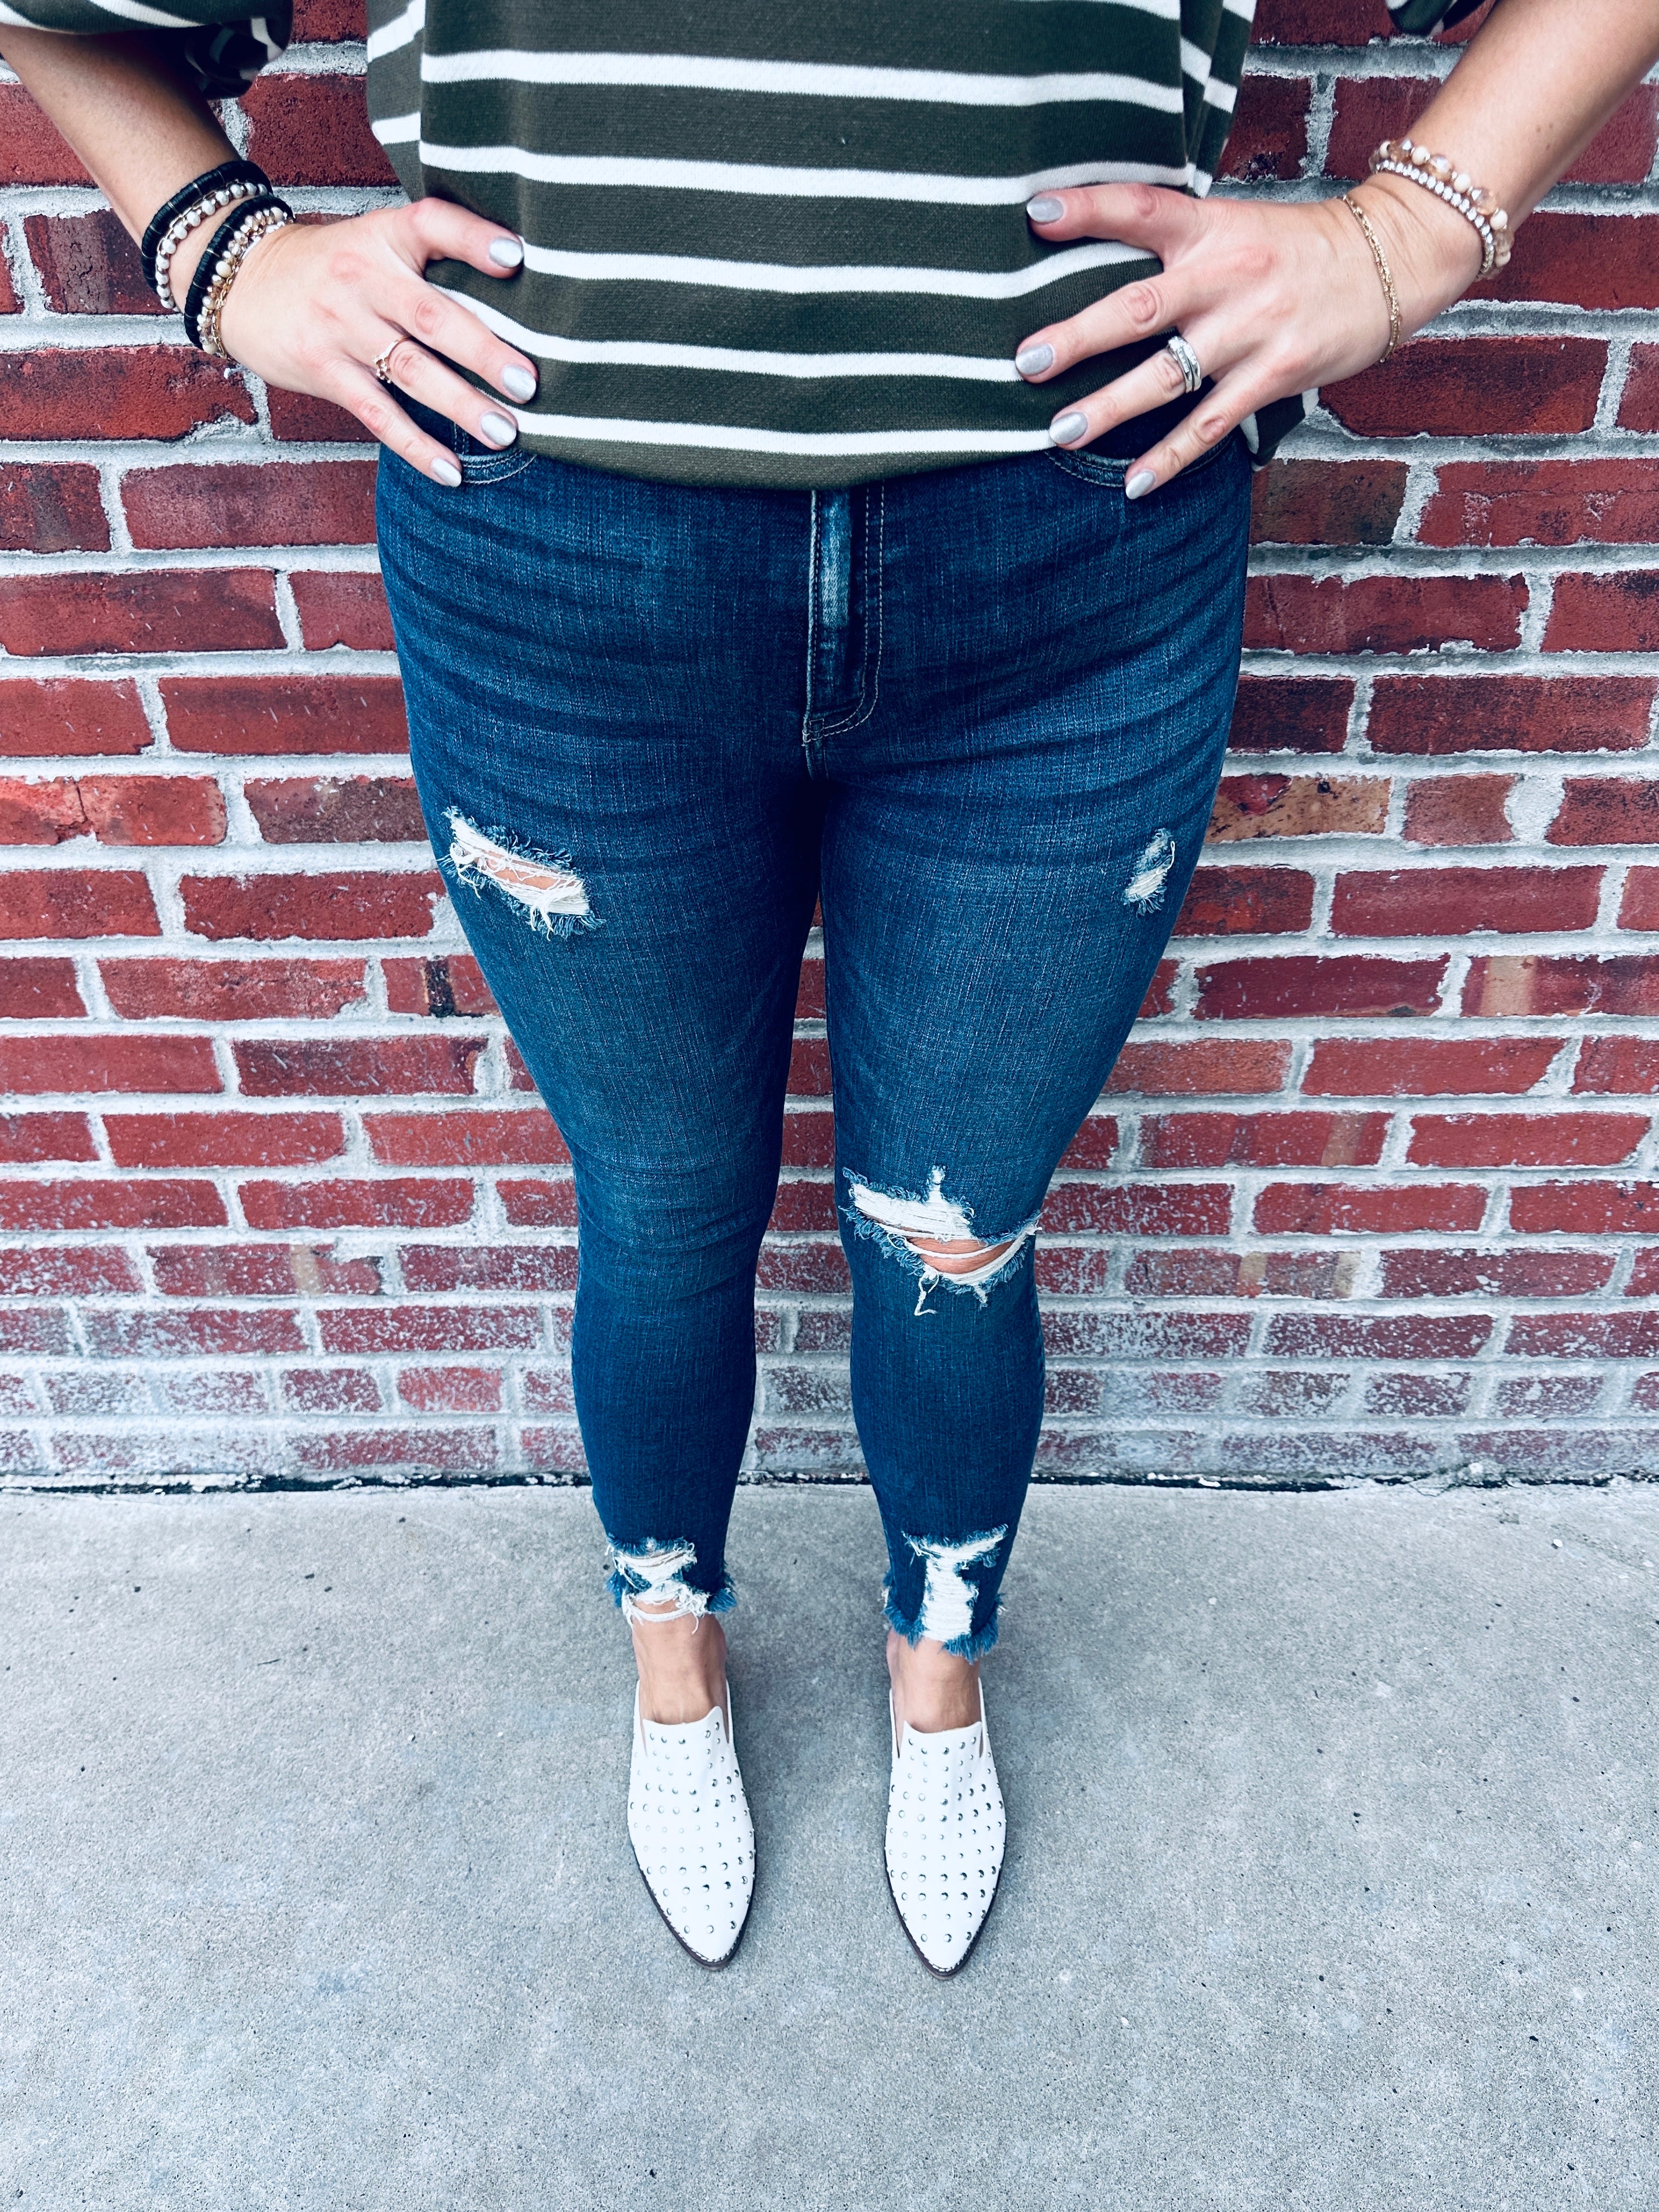 Zenana Distressed Skinny Jeans